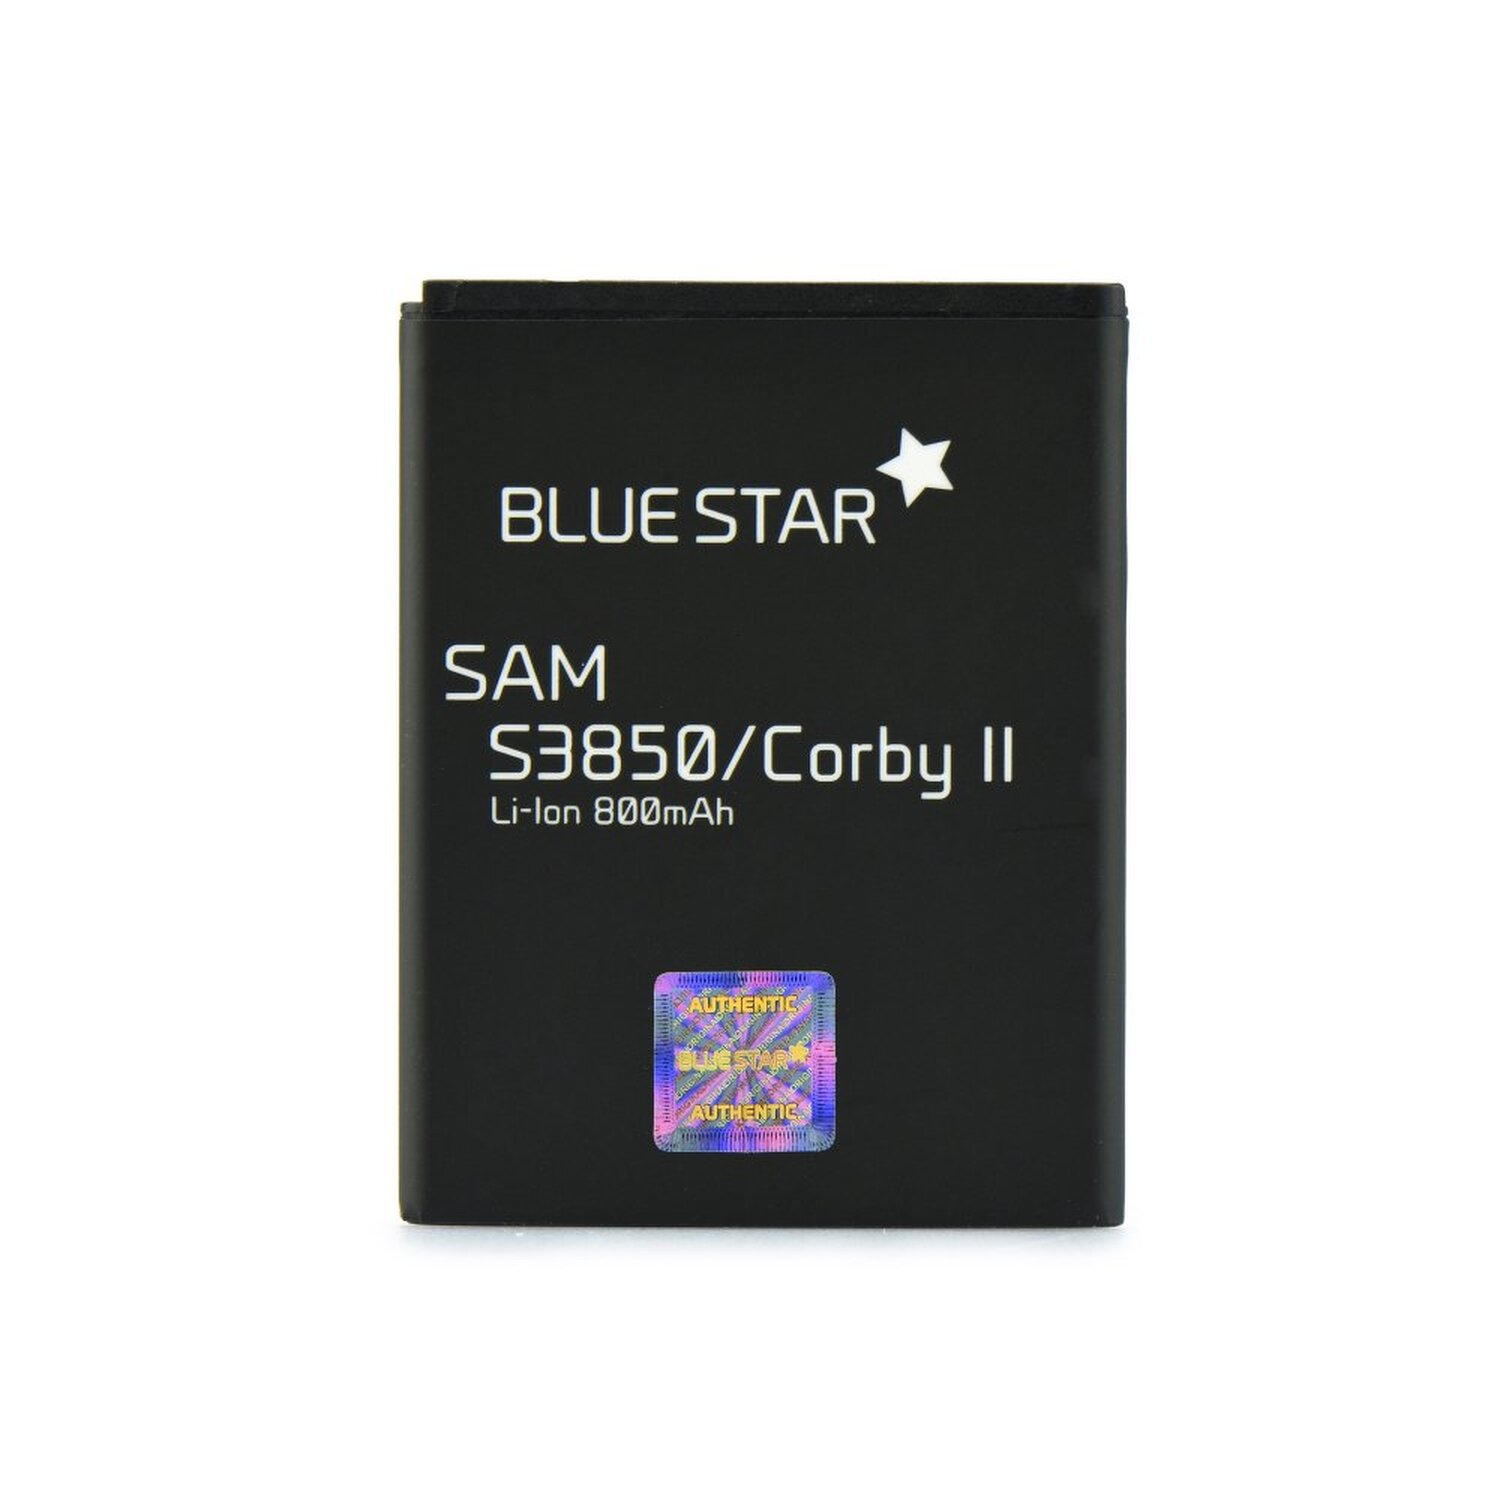 S3850 Samsung Akku Handyakku BLUESTAR 335 Chat für Corby / II Li-Ion